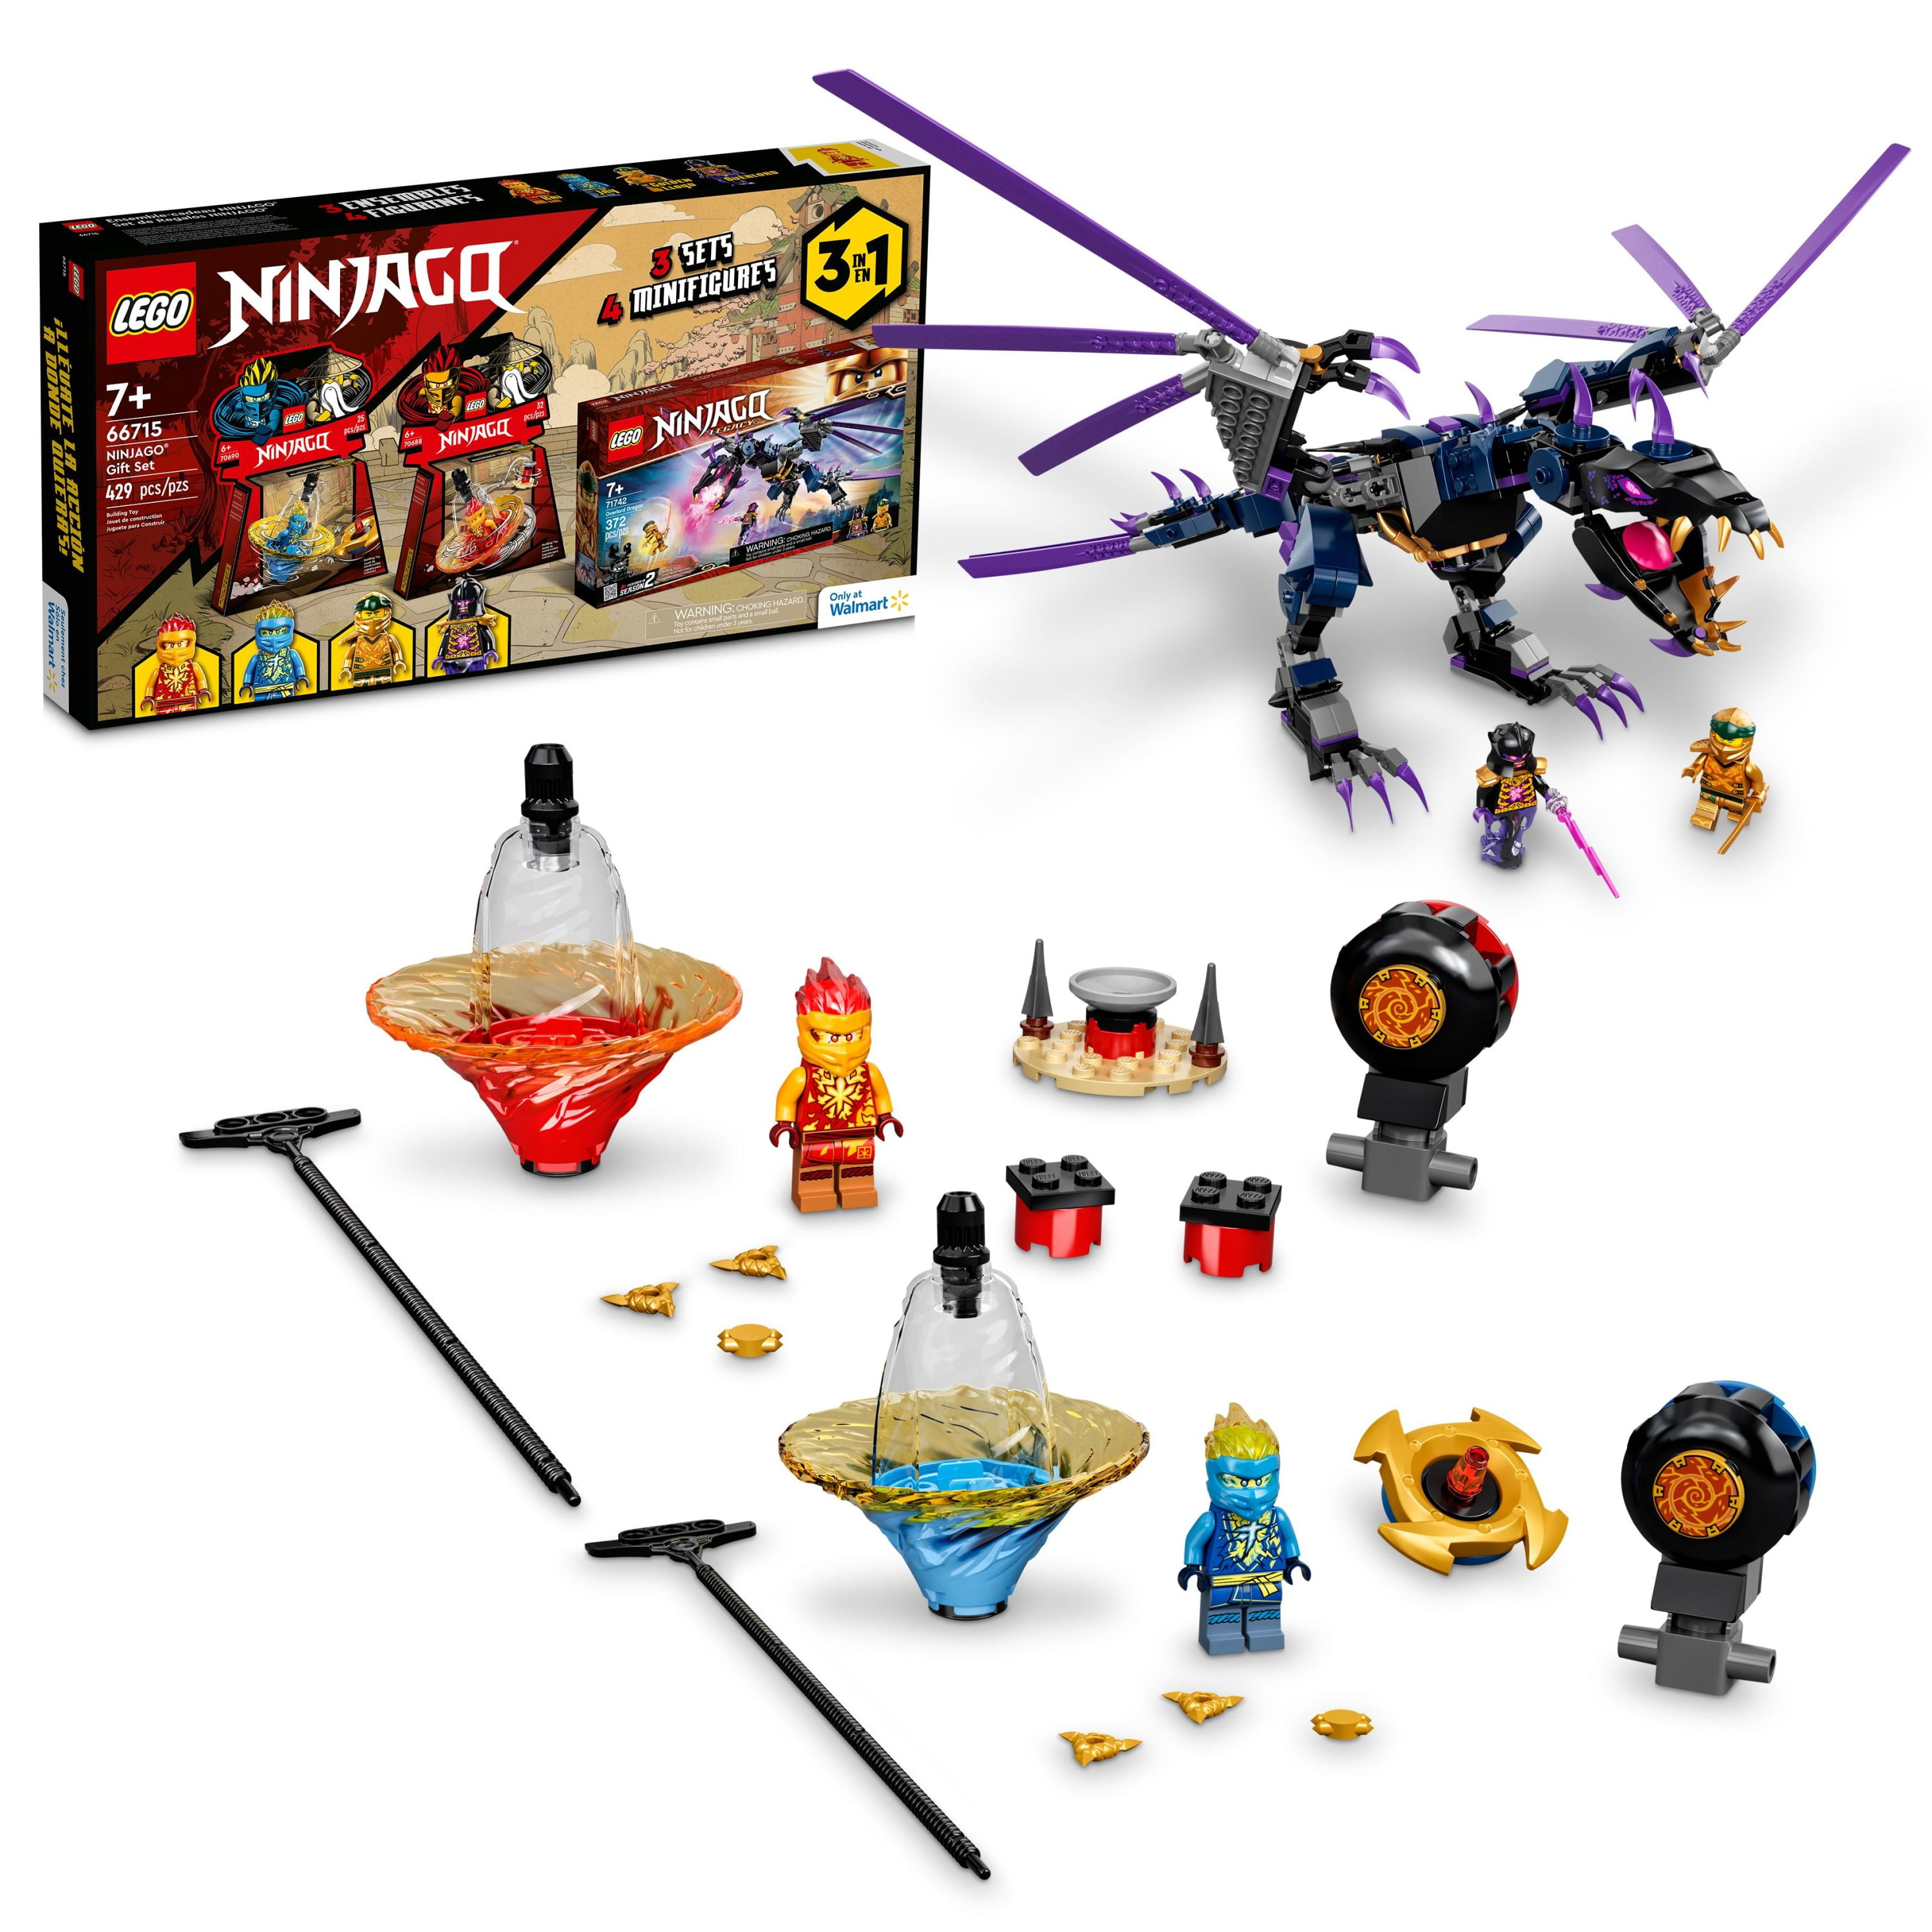 LEGO Ninjago 66715 Building Gift Set Limited Edition For Kids, Boys, and (429 pieces) - Walmart.com